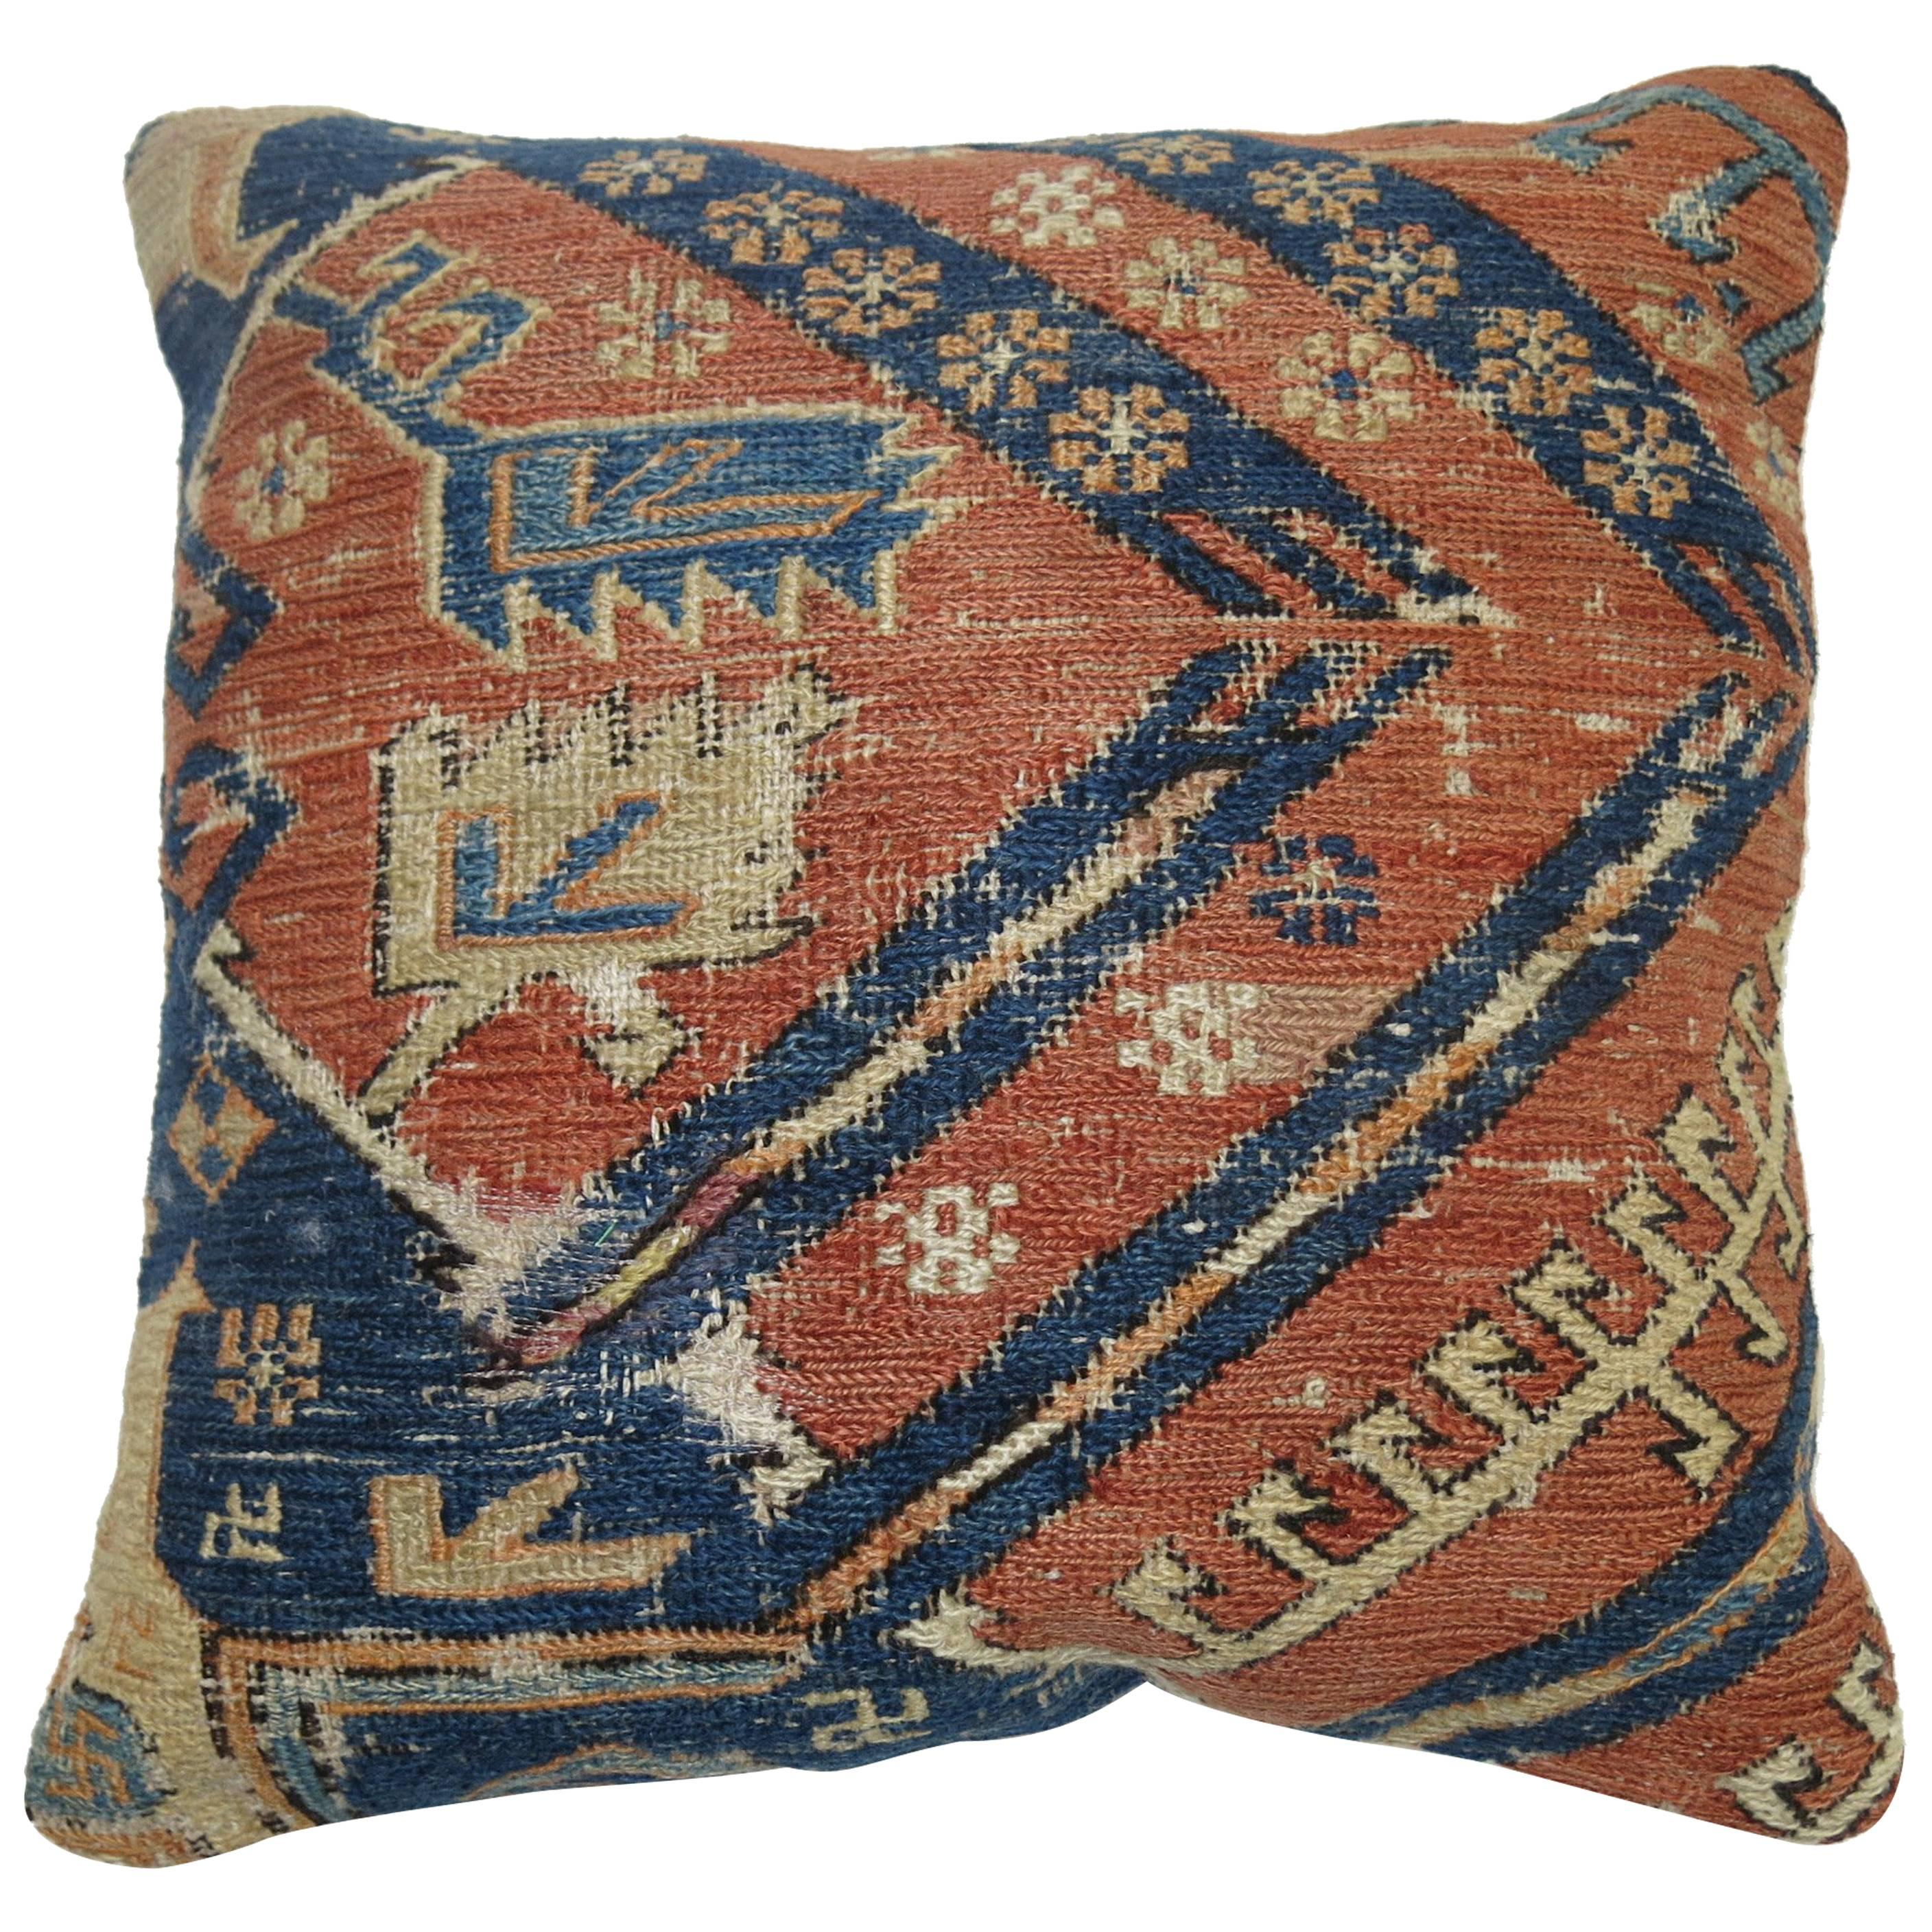 Antique Persian Flat-Weave Rug Pillow